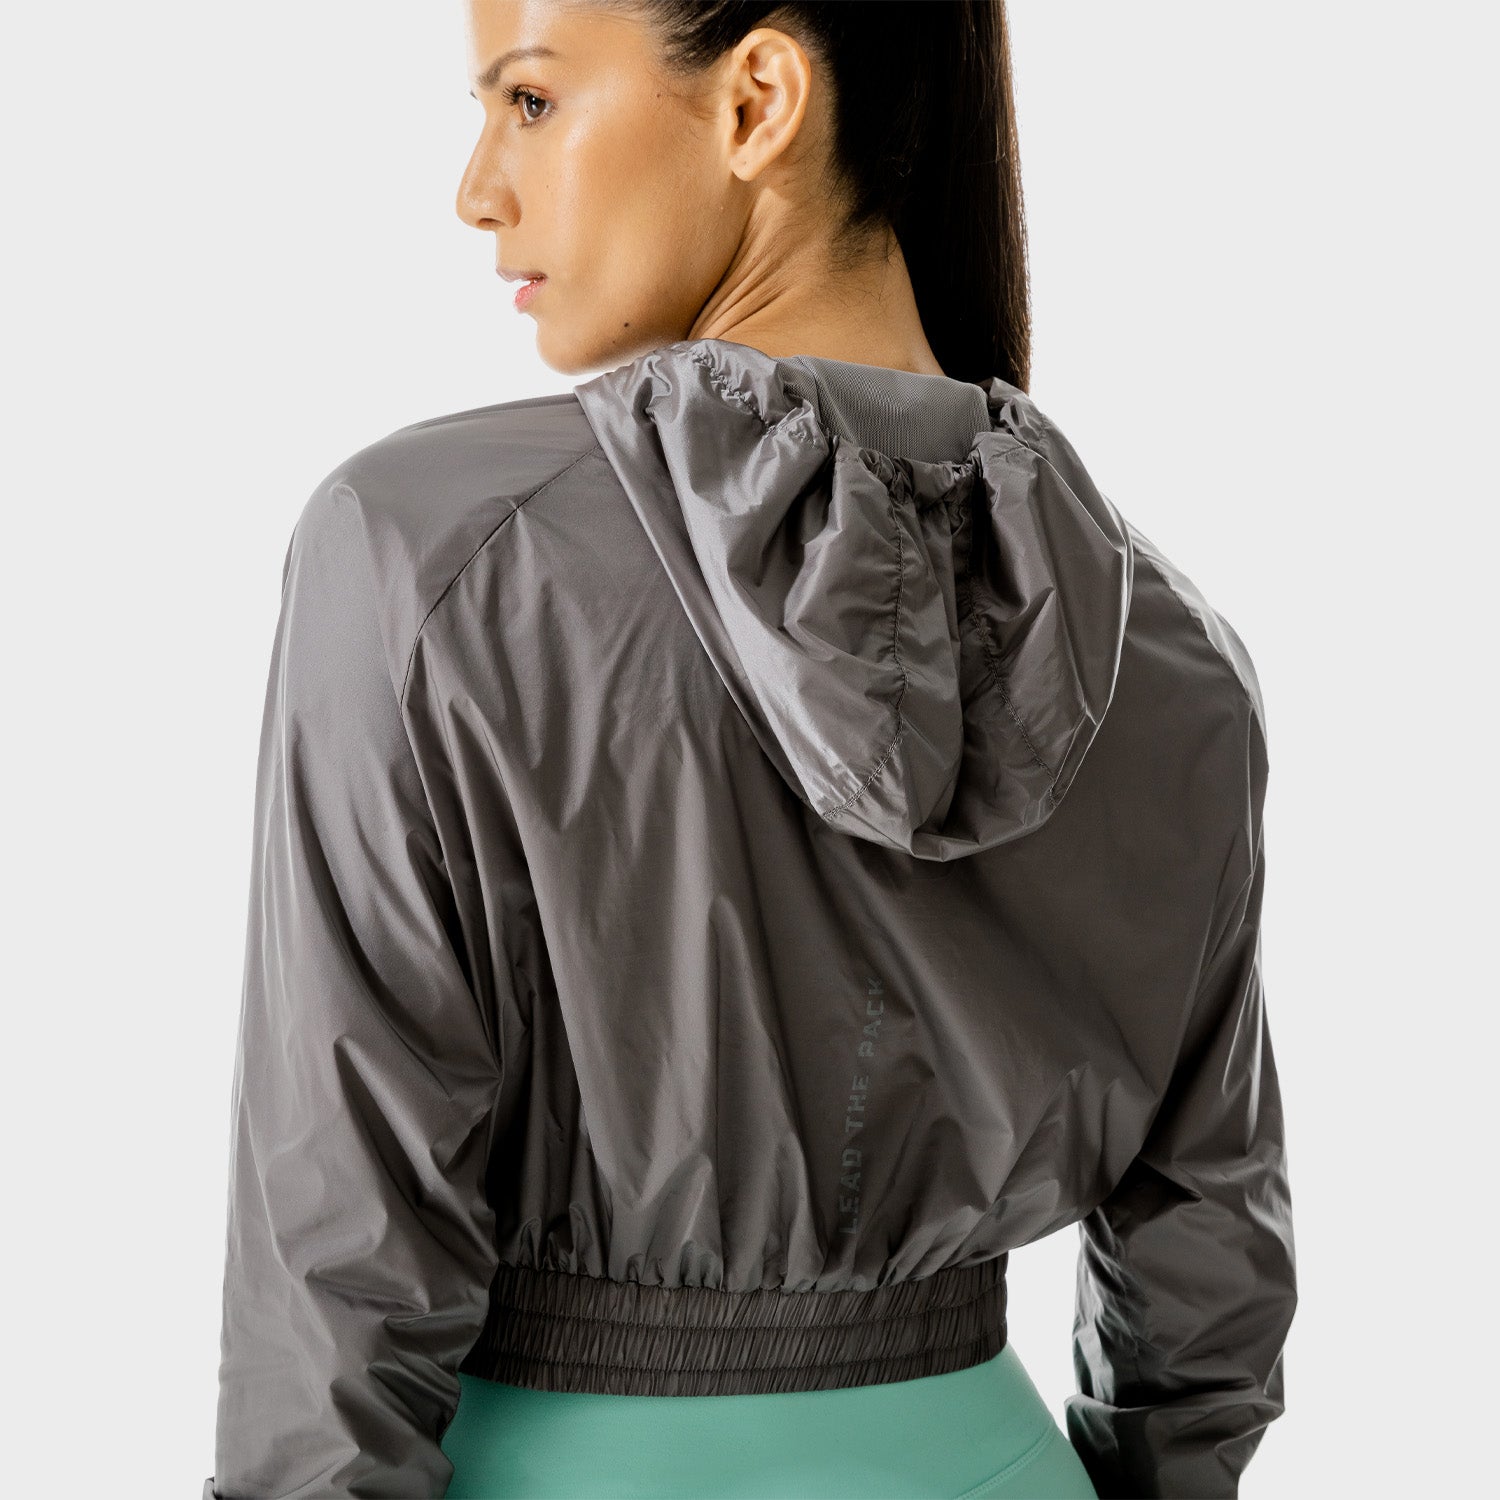 squatwolf-gym-hoodies-women-lab-360-crop-jacket-titanium-workout-clothes